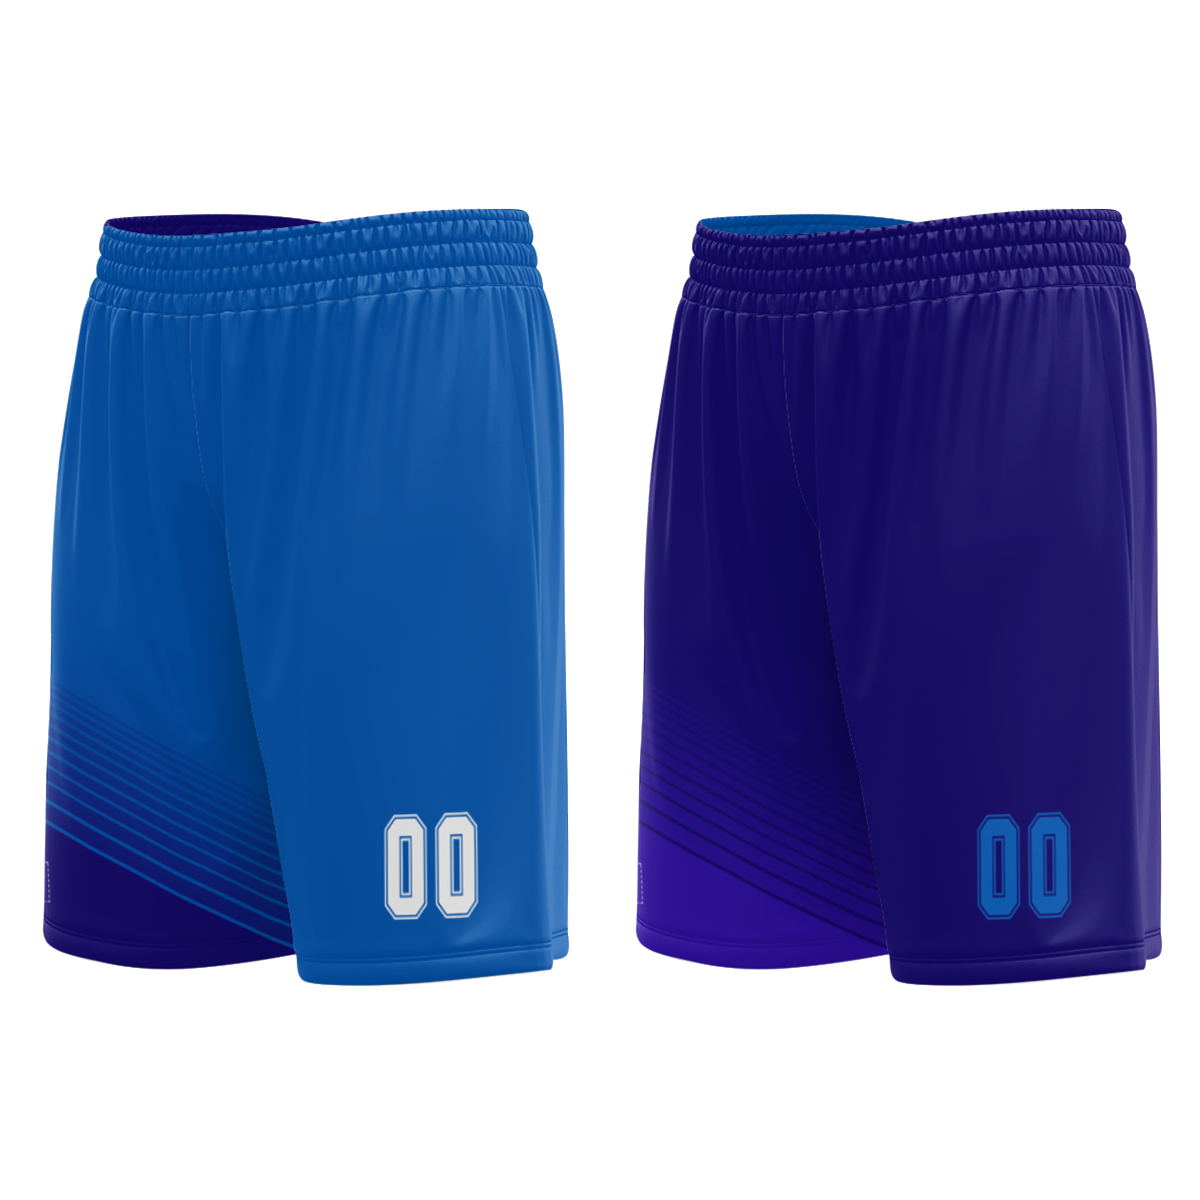 custom-basketball-jerseys-fashion-design-printing-sleeve-college-reversible-basketball-shirts-clothes--at-cj-pod-8